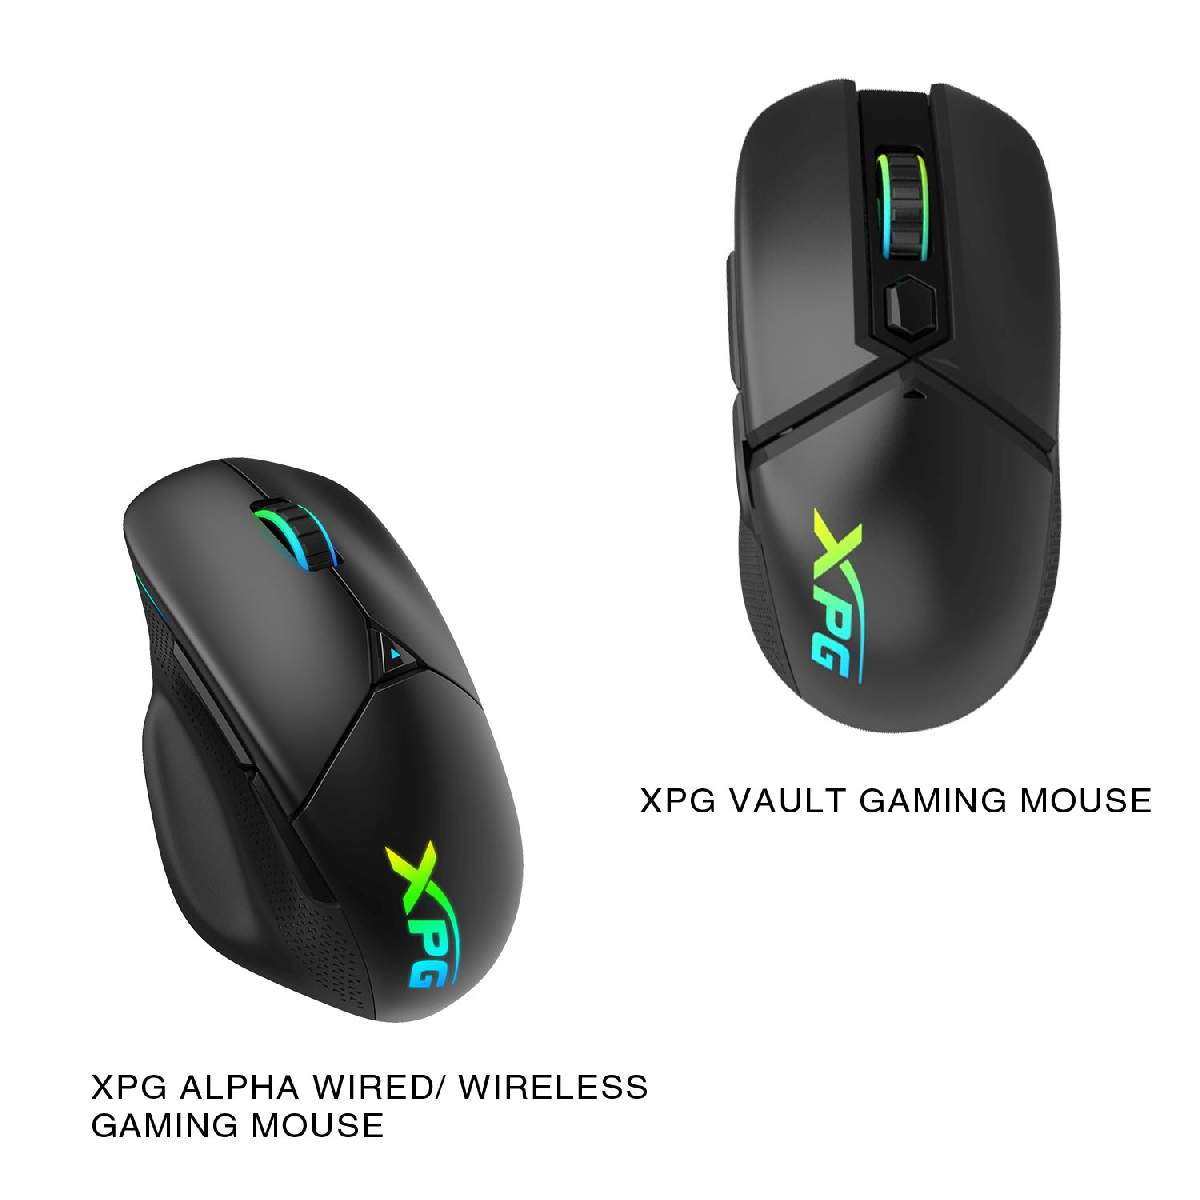 Adata XPG Vault Concept Gaming Mouse